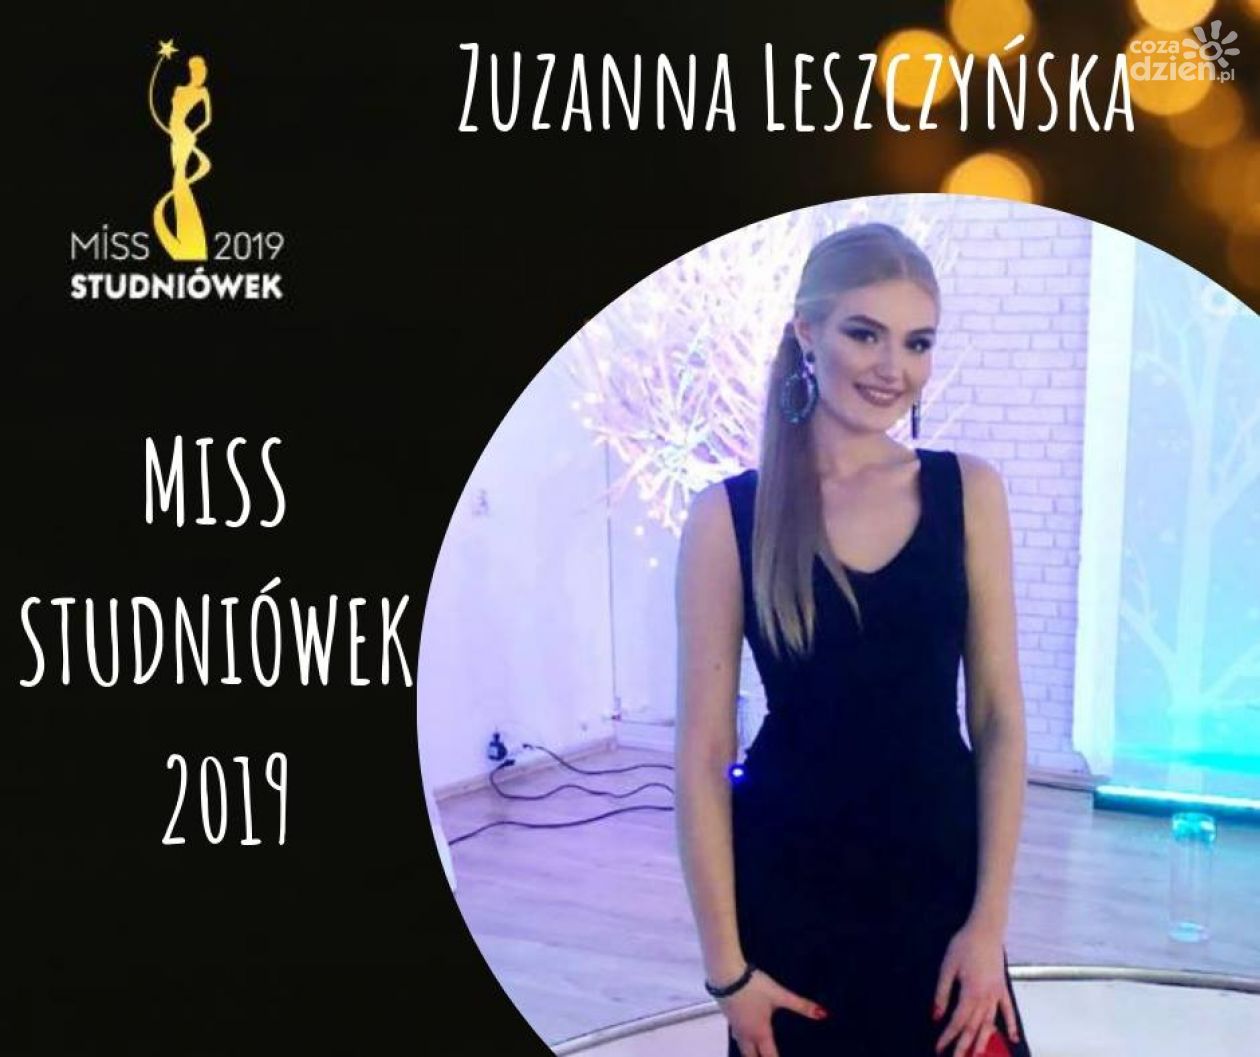 Miss Studniówek 2019: Zuzanna Leszczyńska